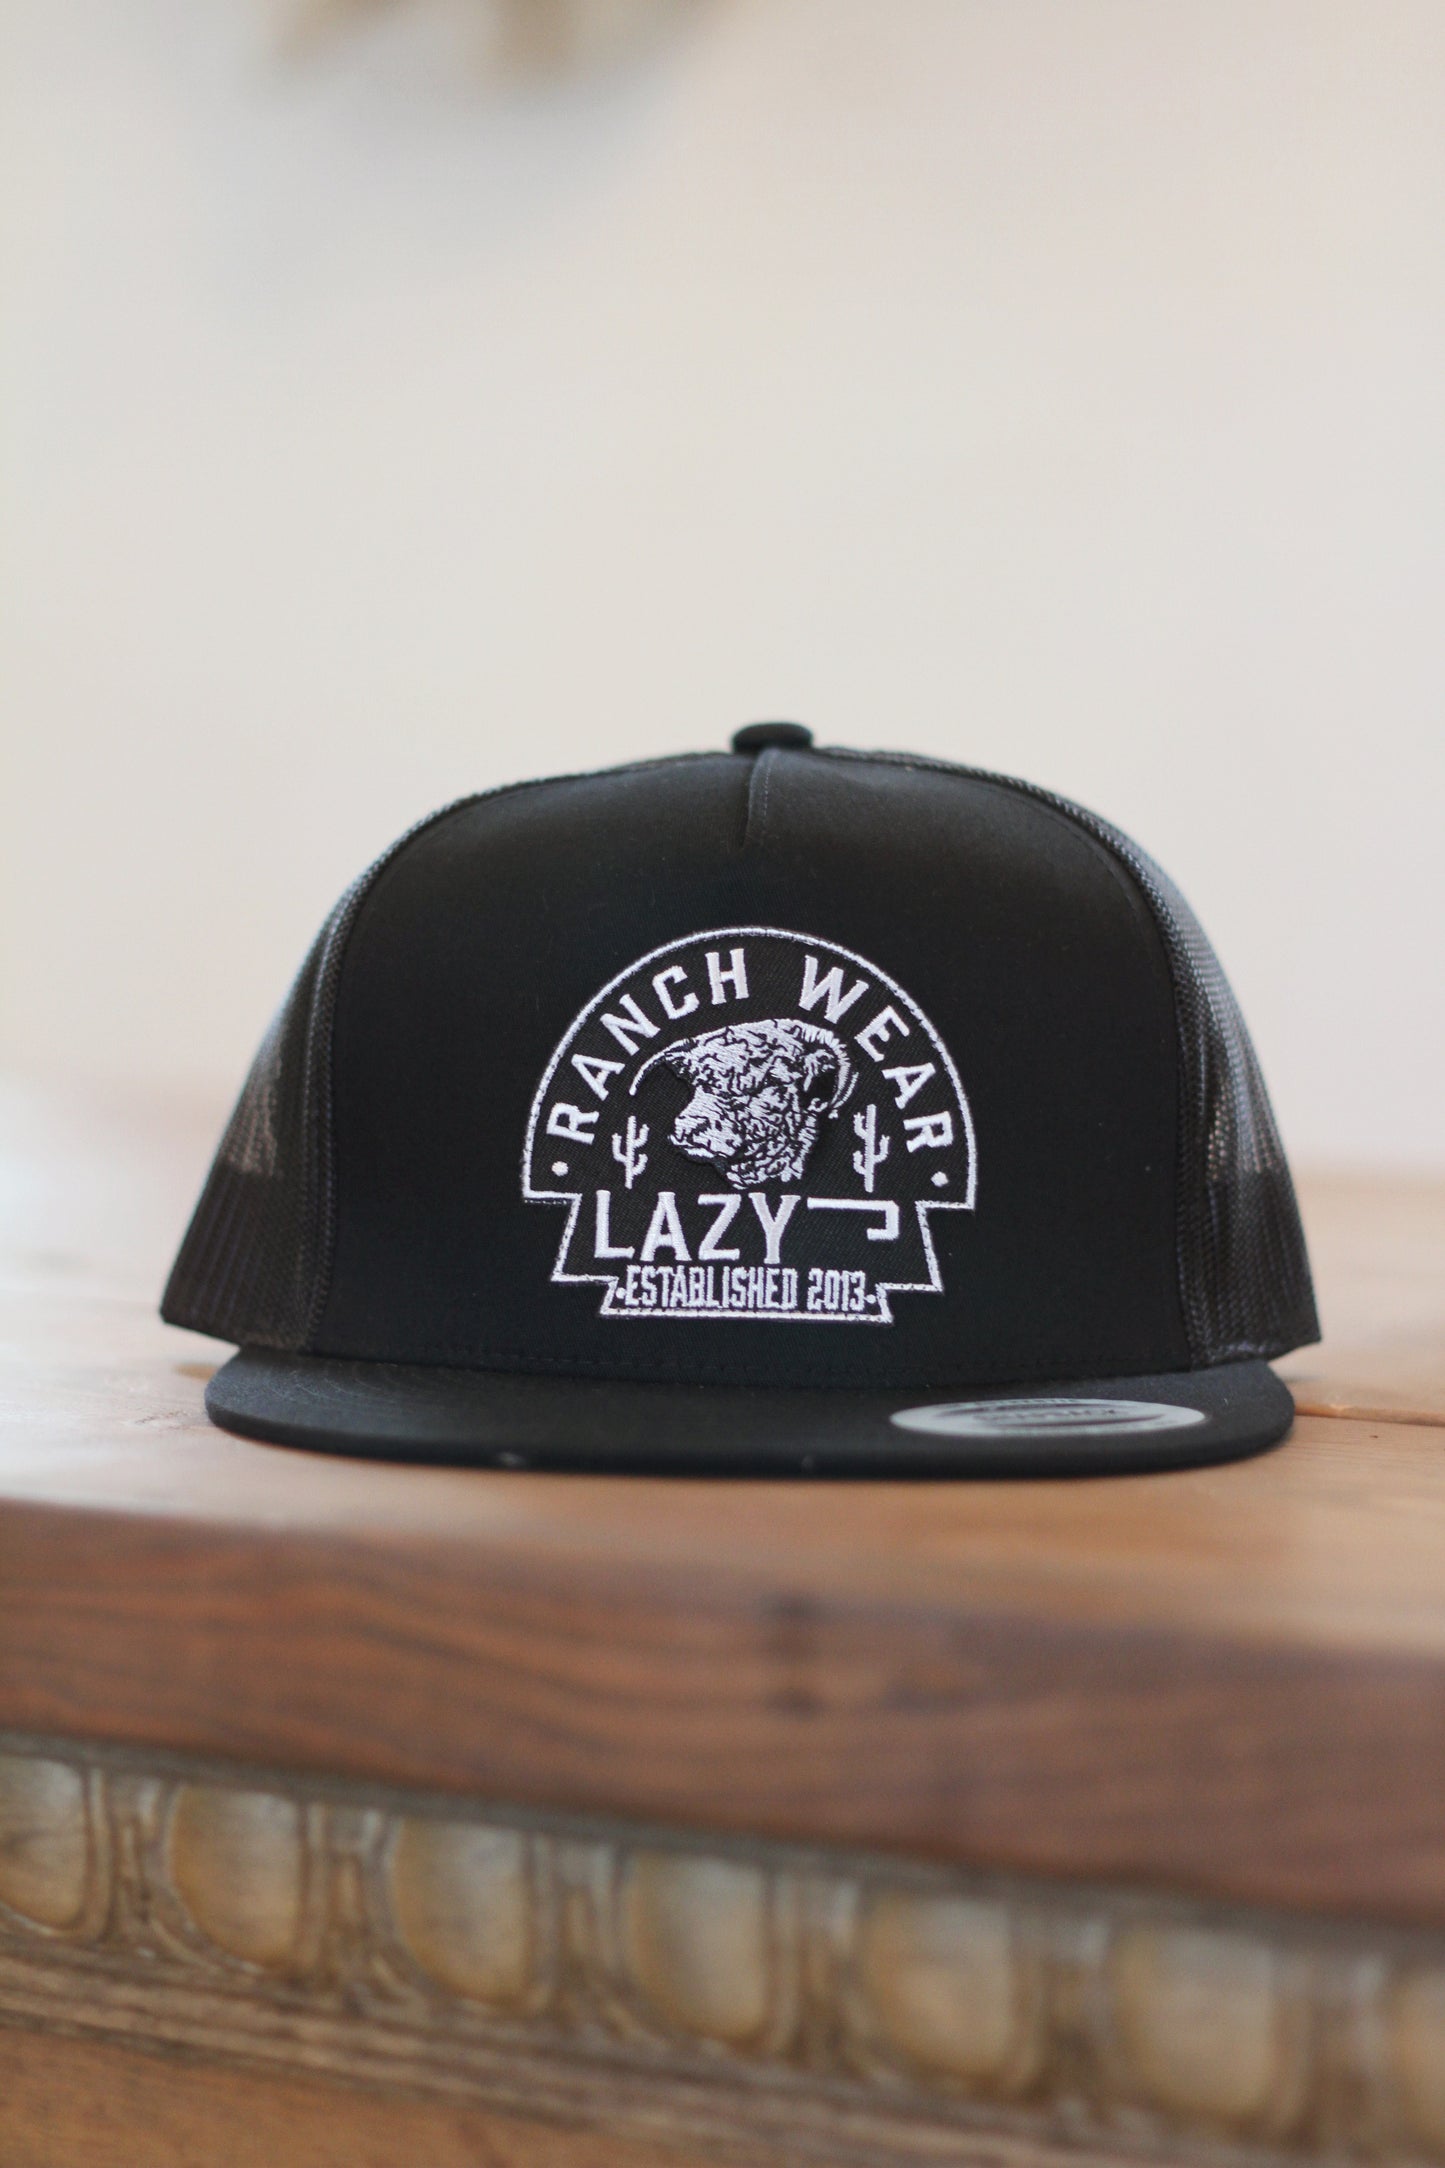 Lazy J Ranch Wear Black & Black TRW Arrowhead Patch Cap